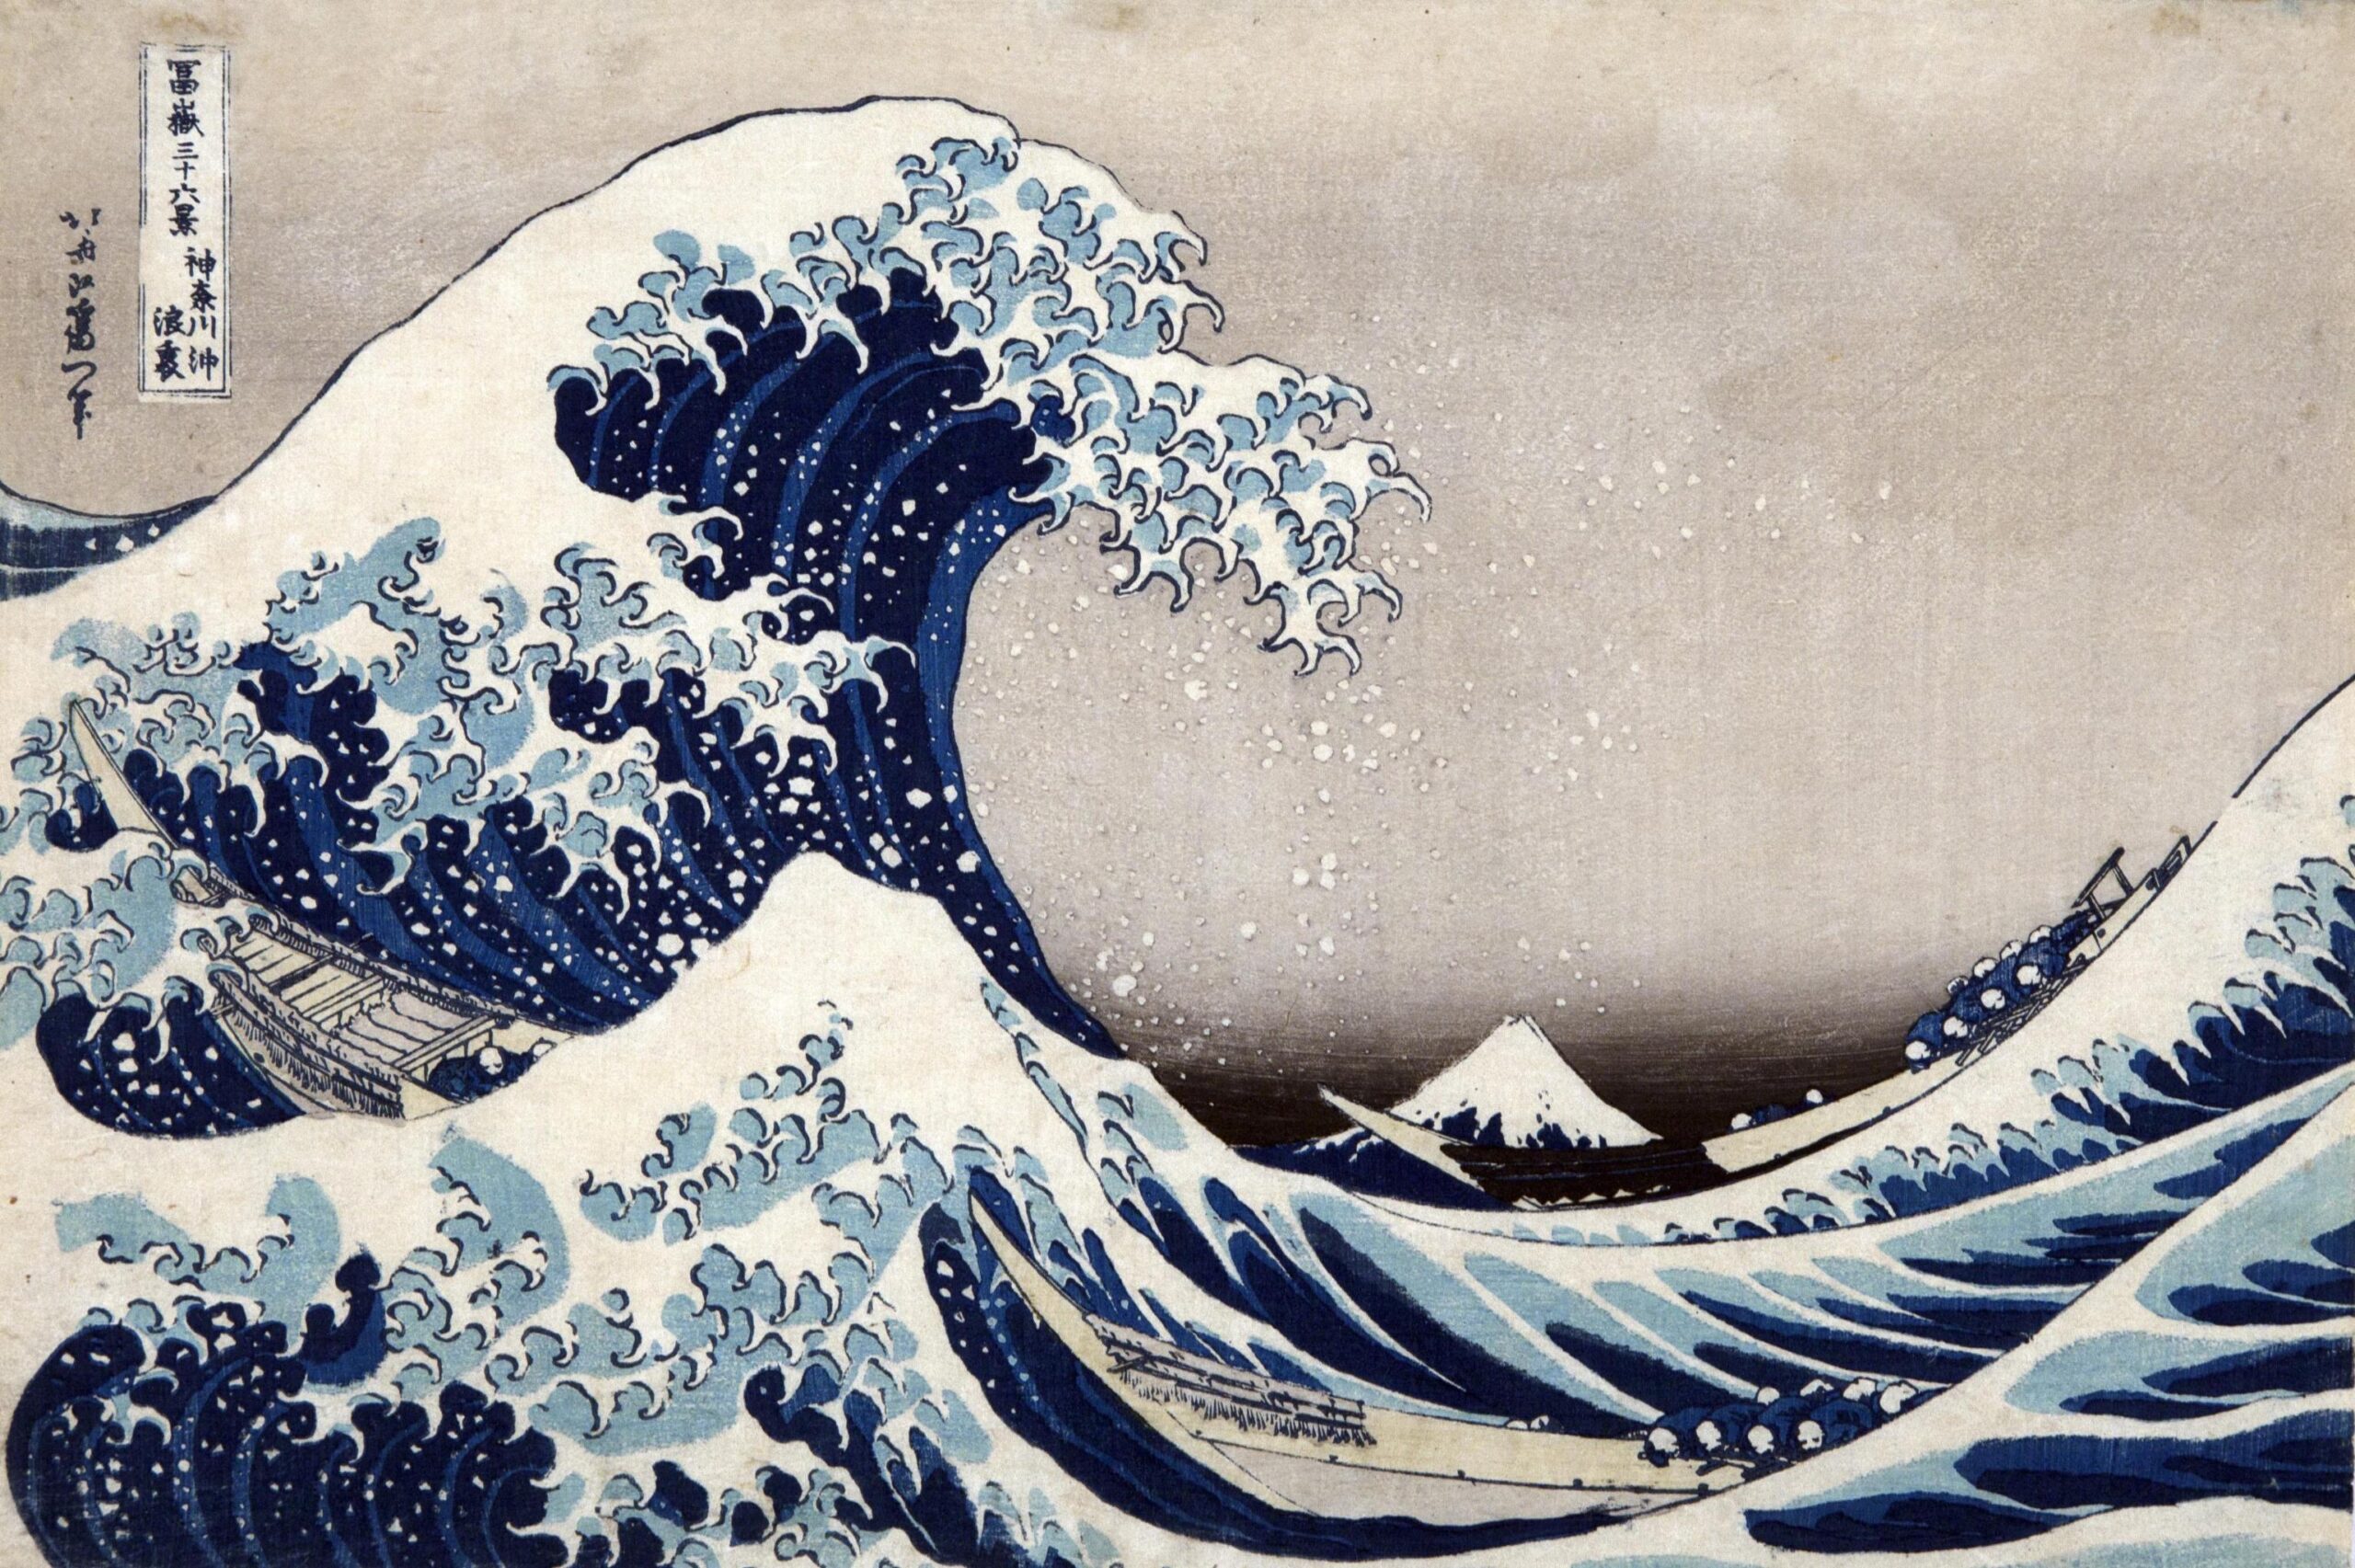 Gallina dalle uova d’oro: «La grande onda» di Hokusai venduta all’asta per 2,7 milioni di dollari. È l’opera d’arte più riprodotta di sempre